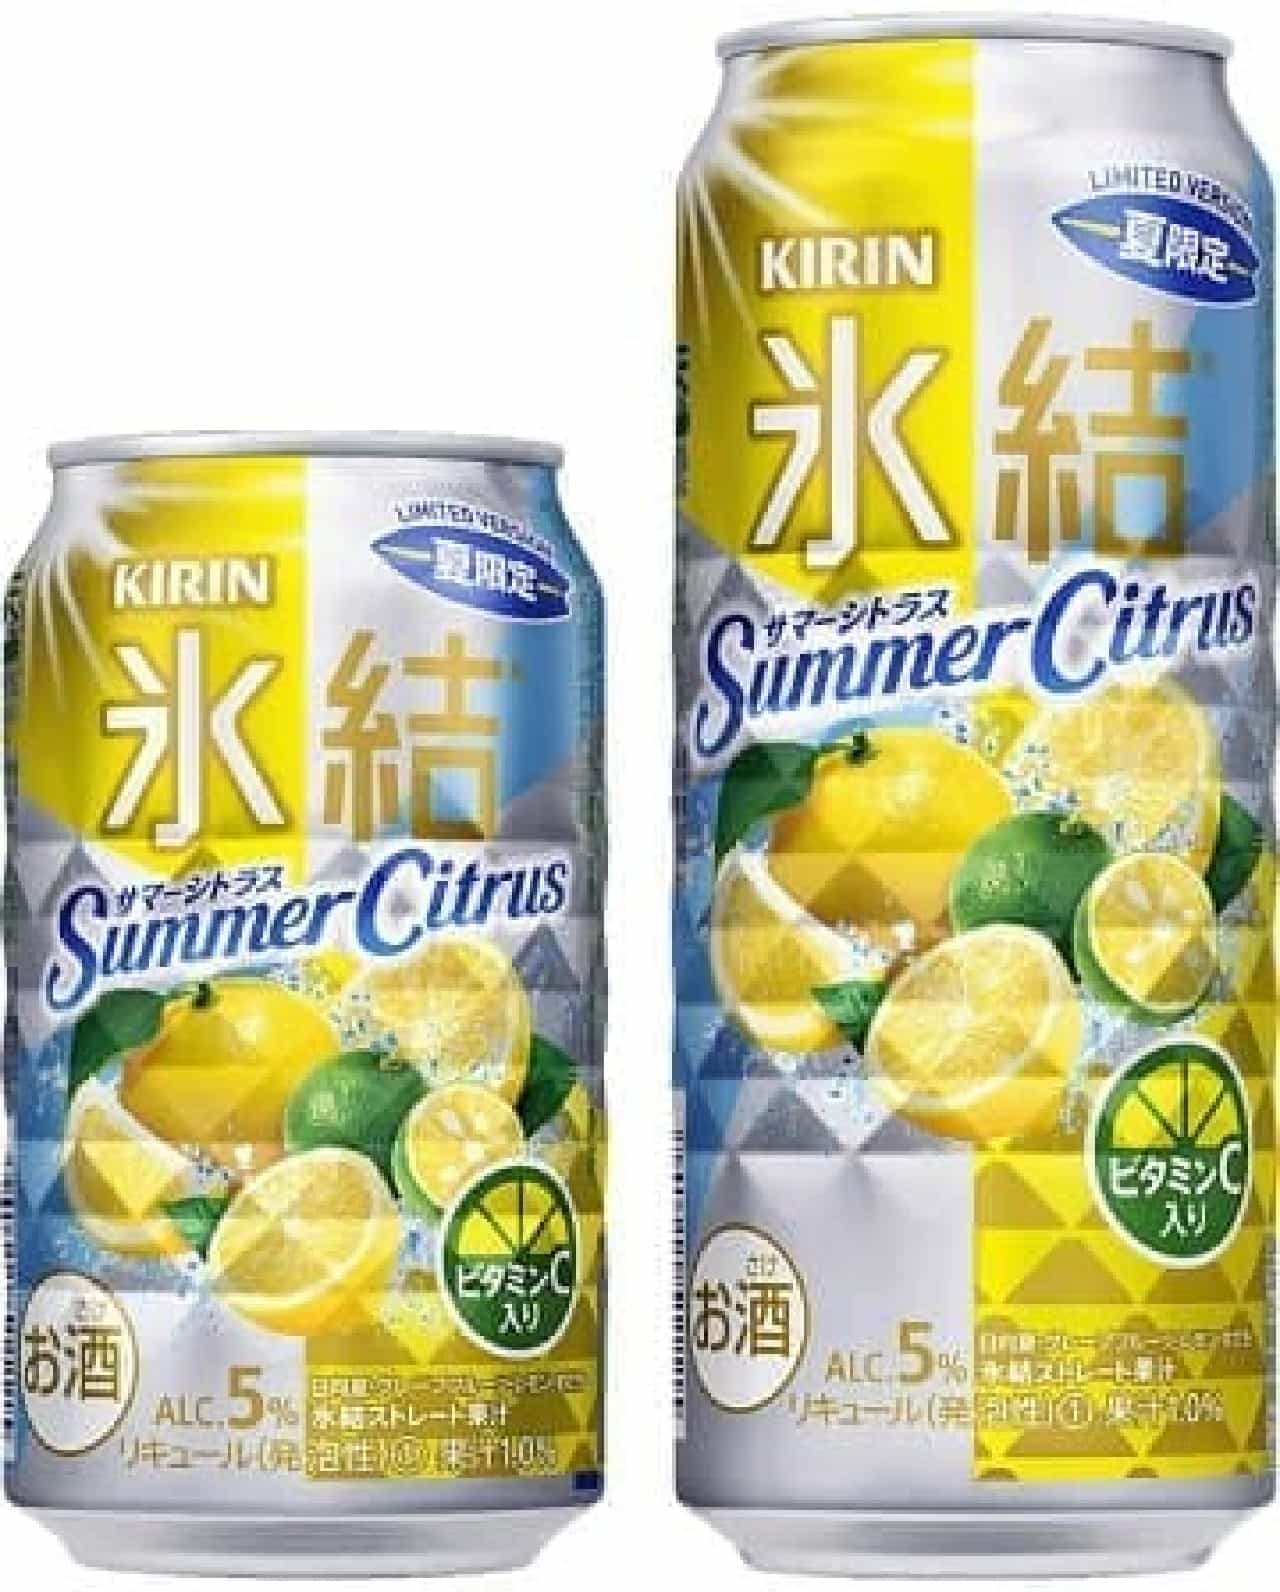 Kirin Beer "Kirin Freezing Summer Citrus"